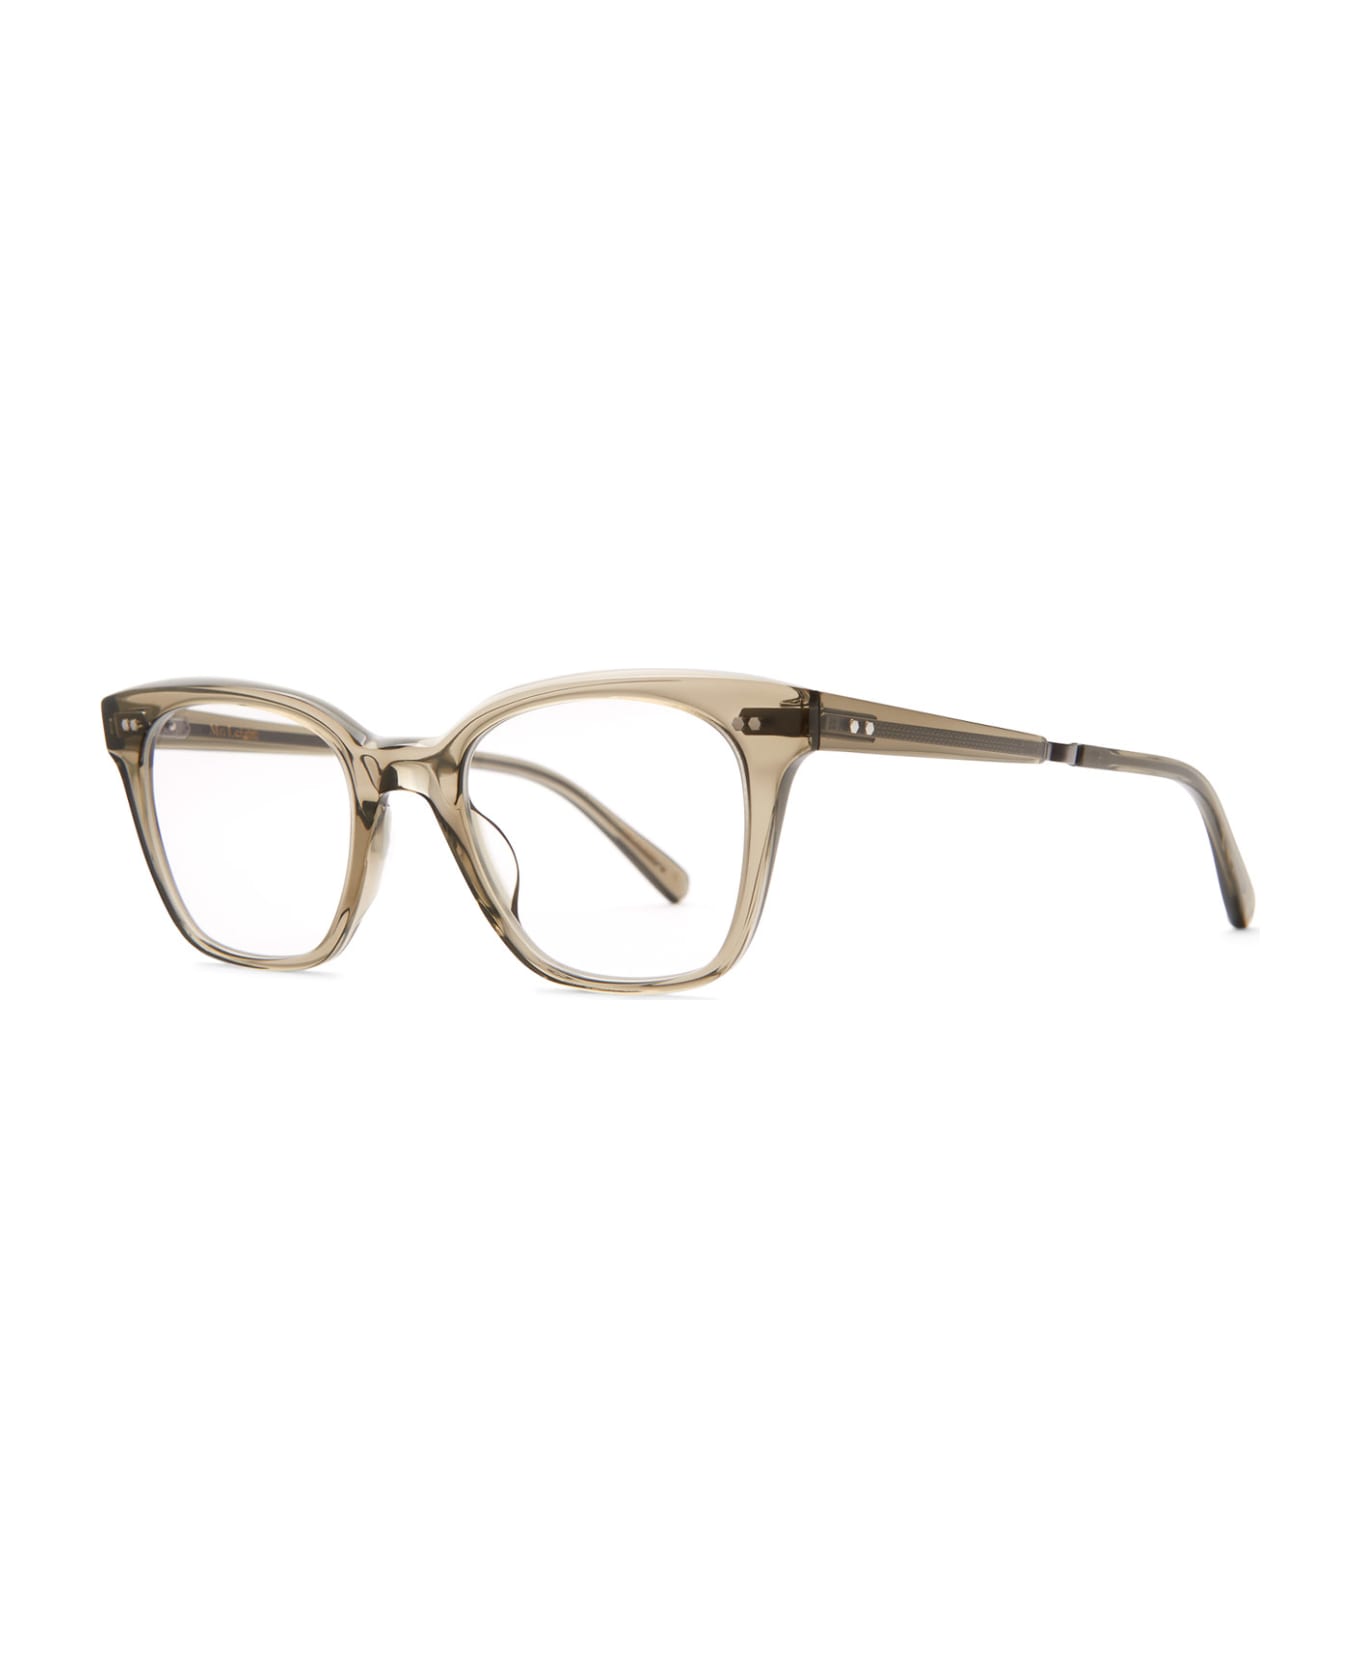 Mr. Leight Morgan C Hunter-matte Platinum Glasses - Hunter-Matte Platinum アイウェア